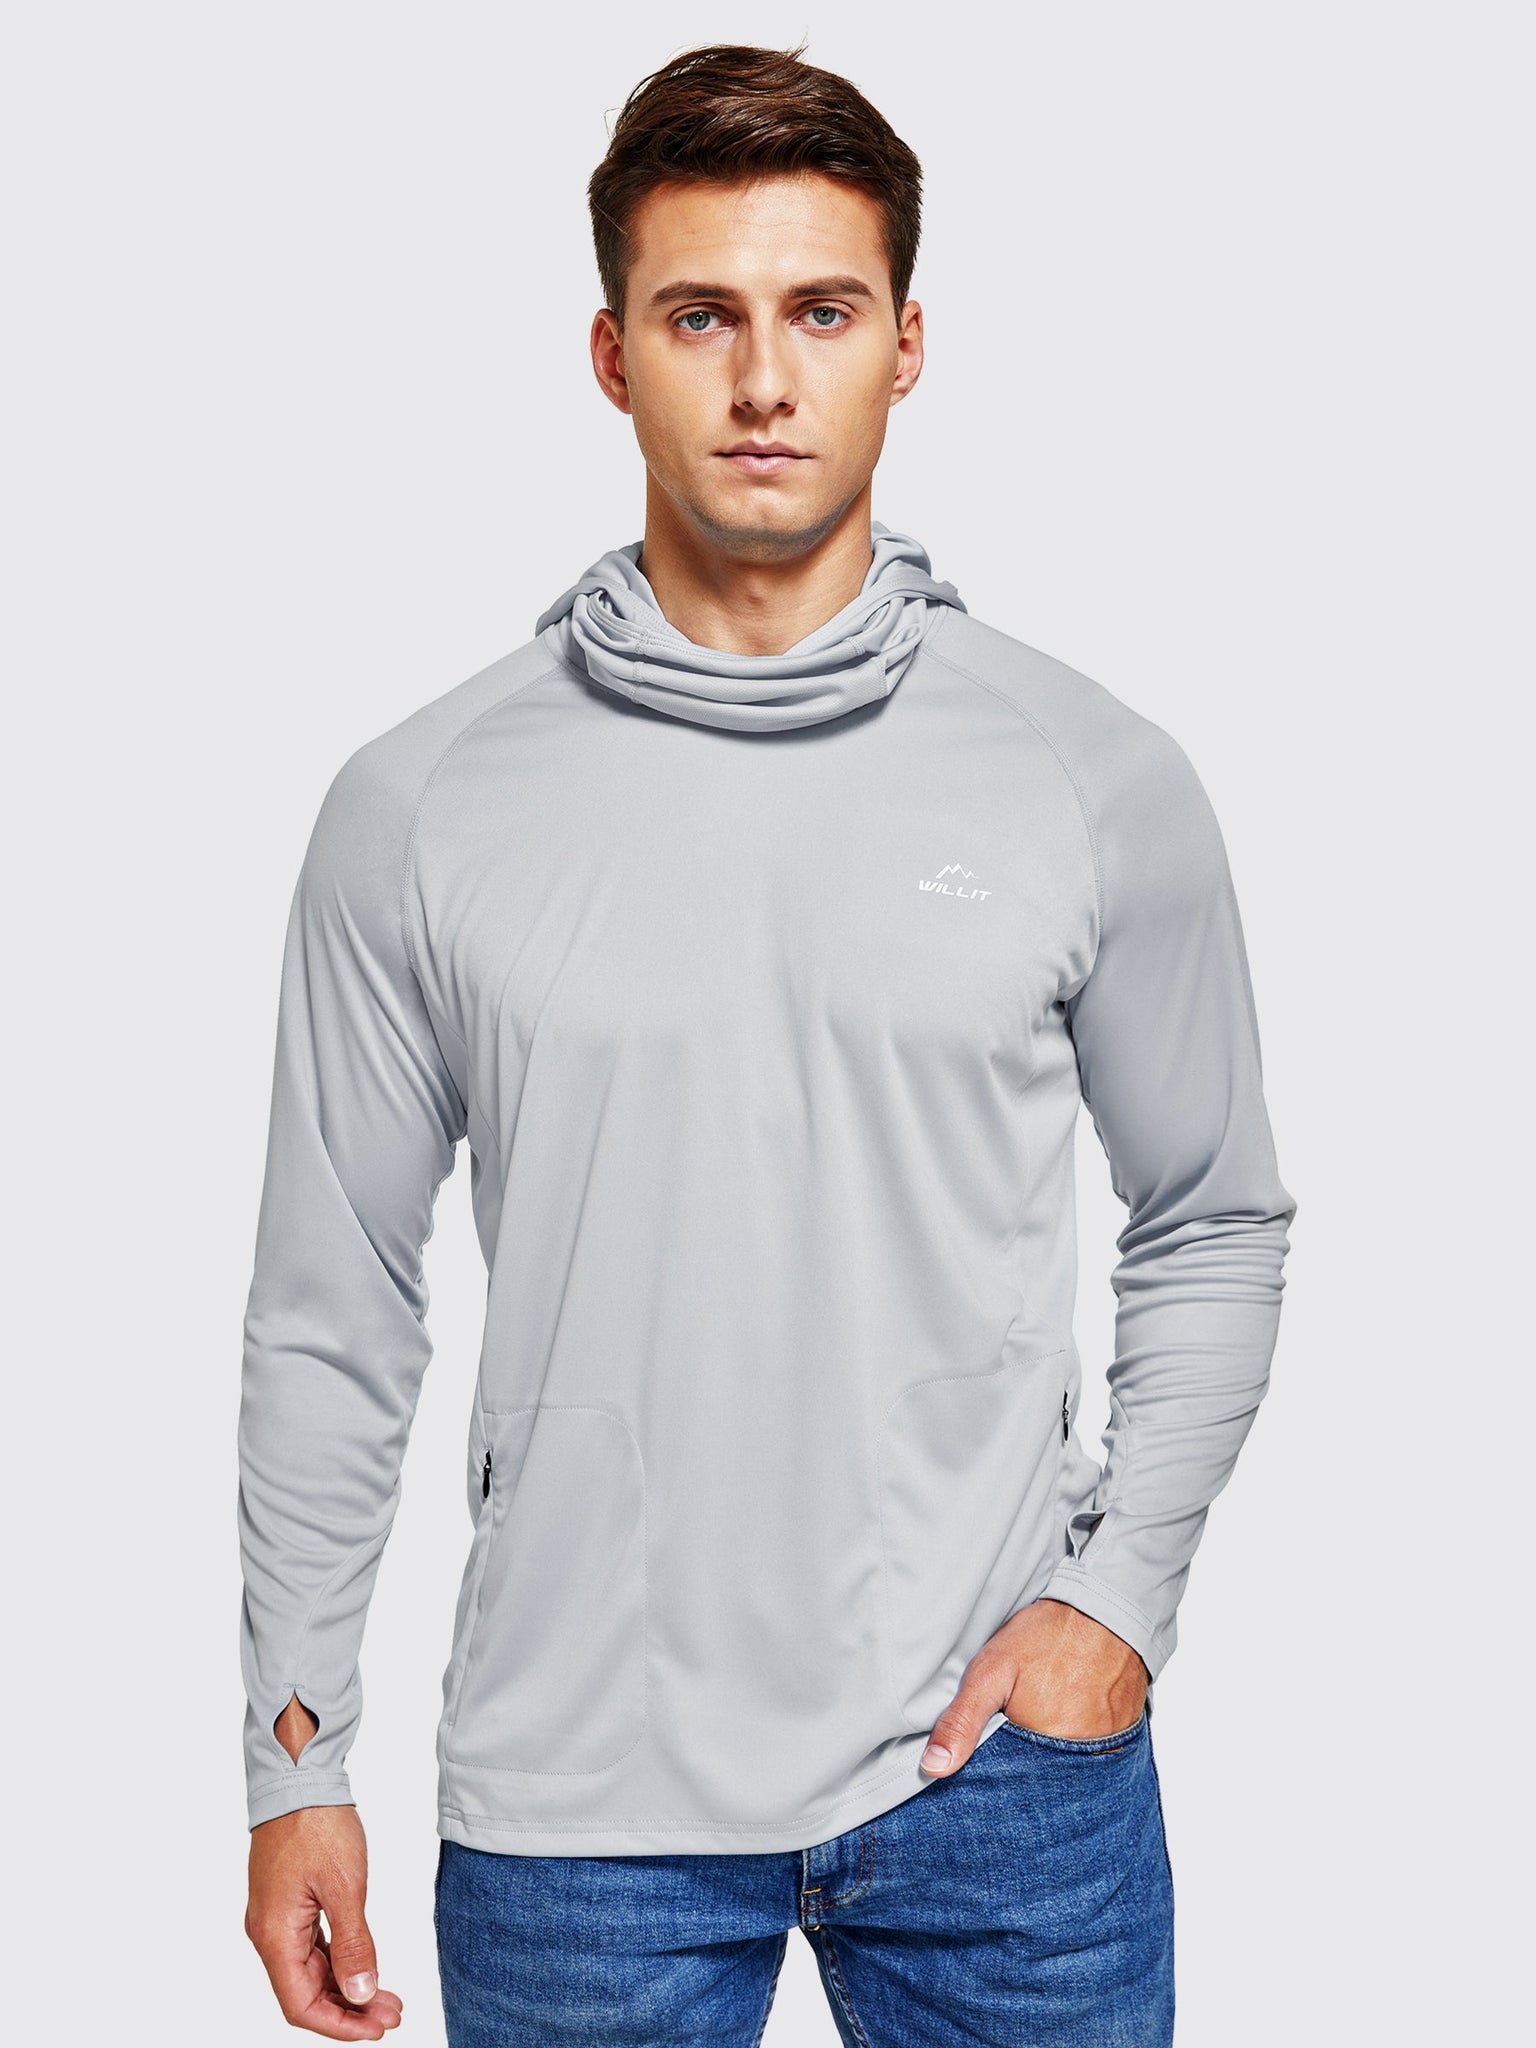 $6/mo - Finance Willit Men's UPF 50+ Sun Protection Hoodie Shirt